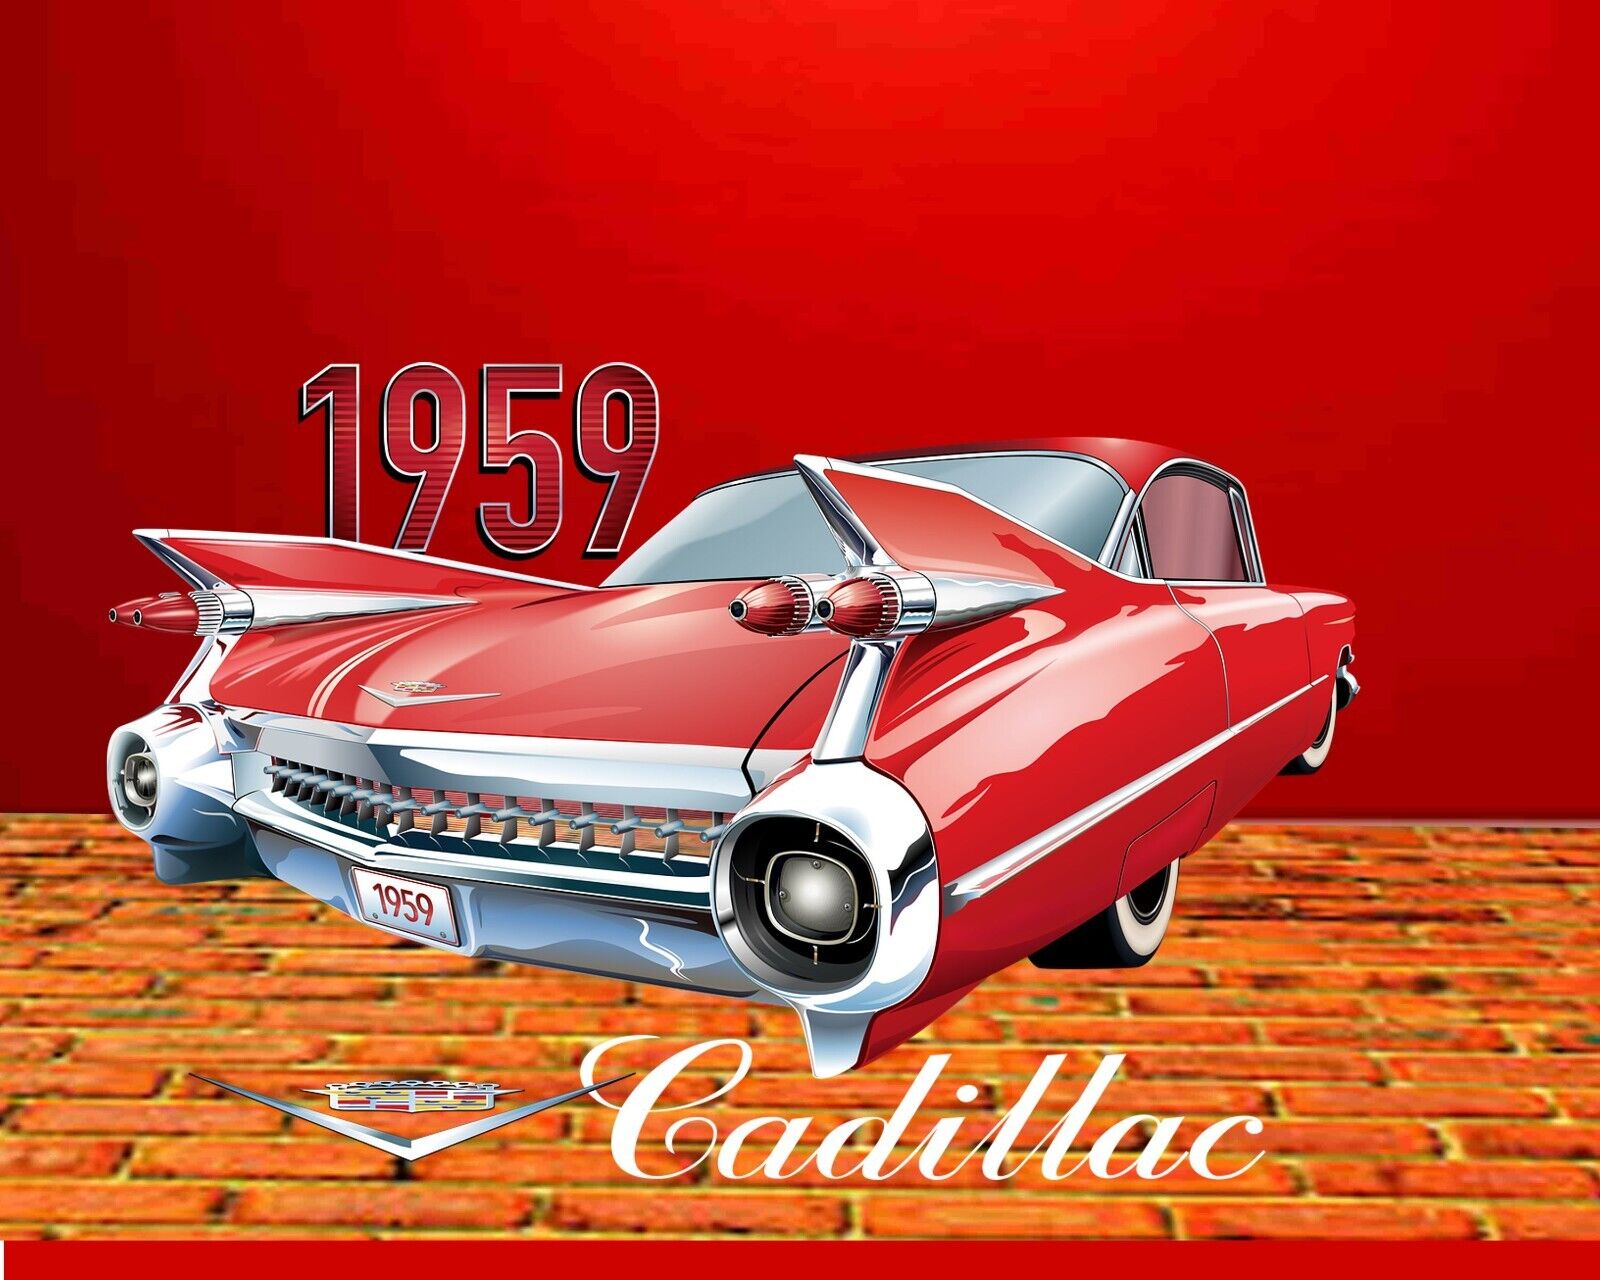 1959 Cadillac Convertible car Mouse Pad Desktop Computer Supplies 7 3/4 x 9\